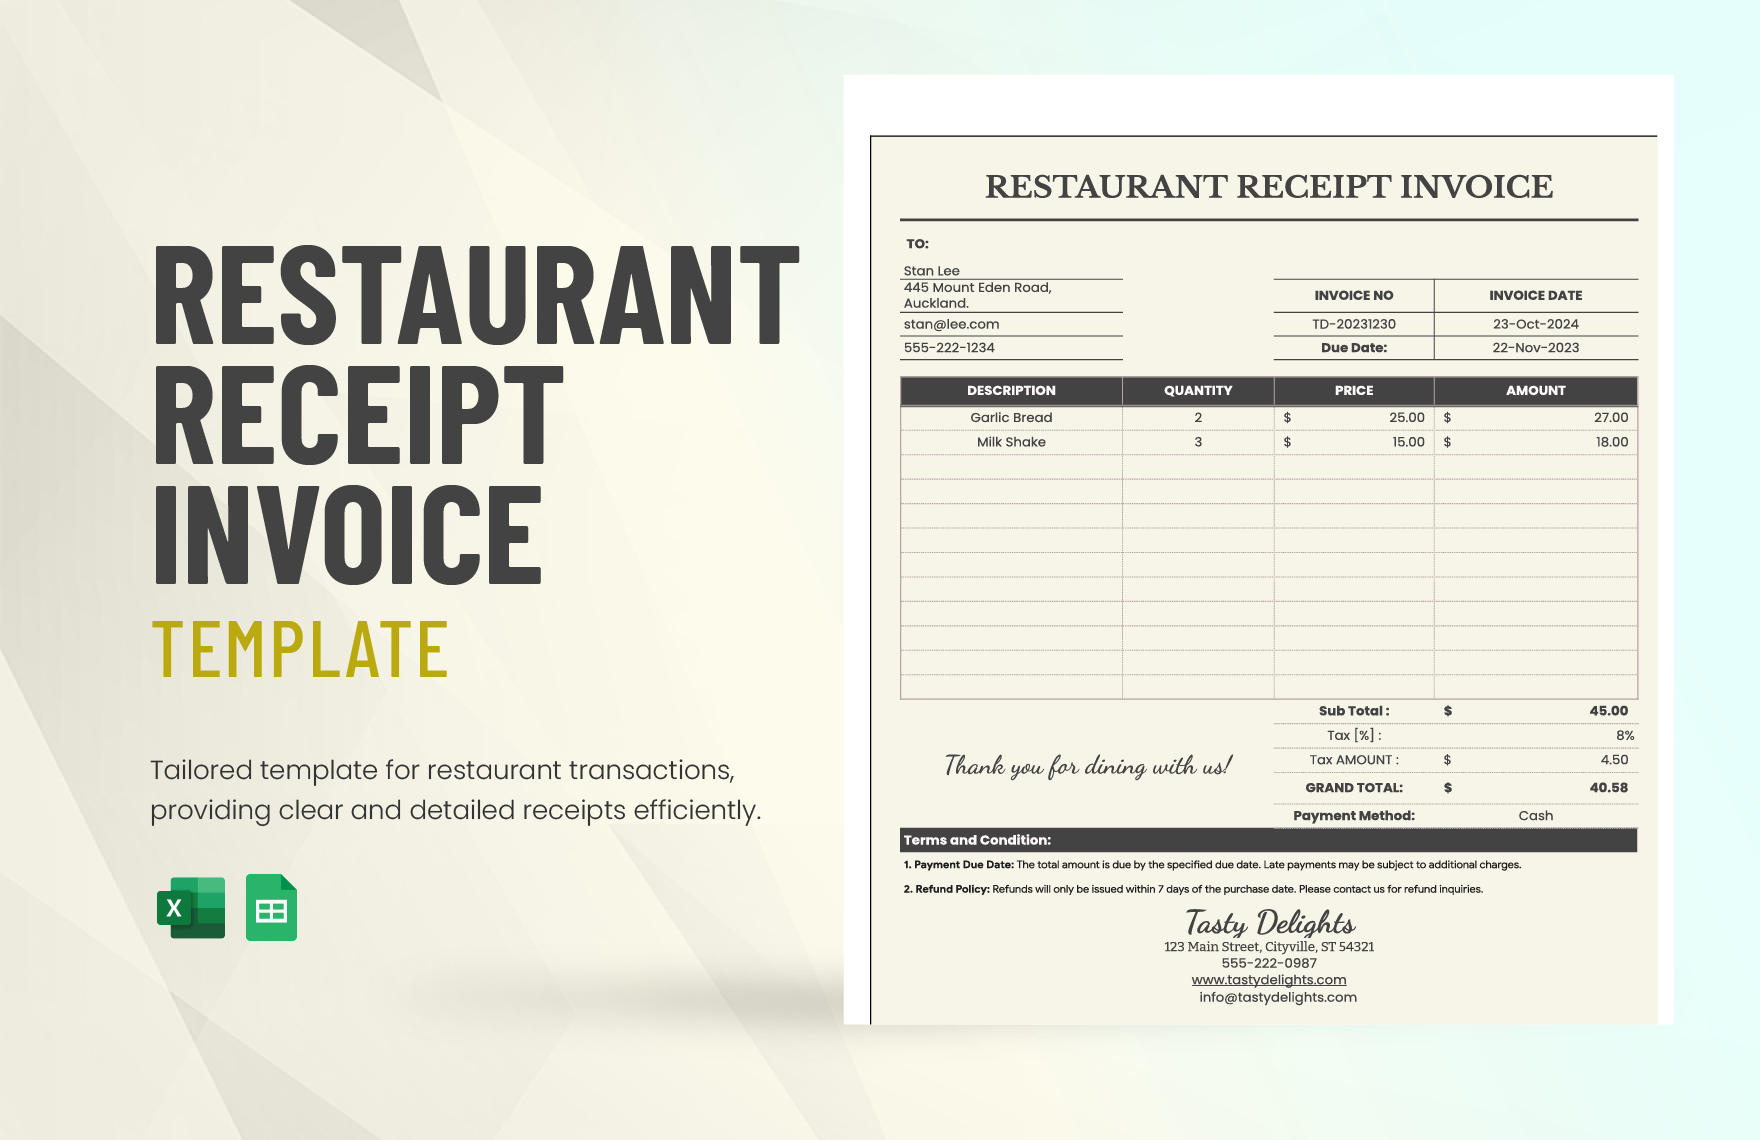 Restaurant Receipt Invoice Template